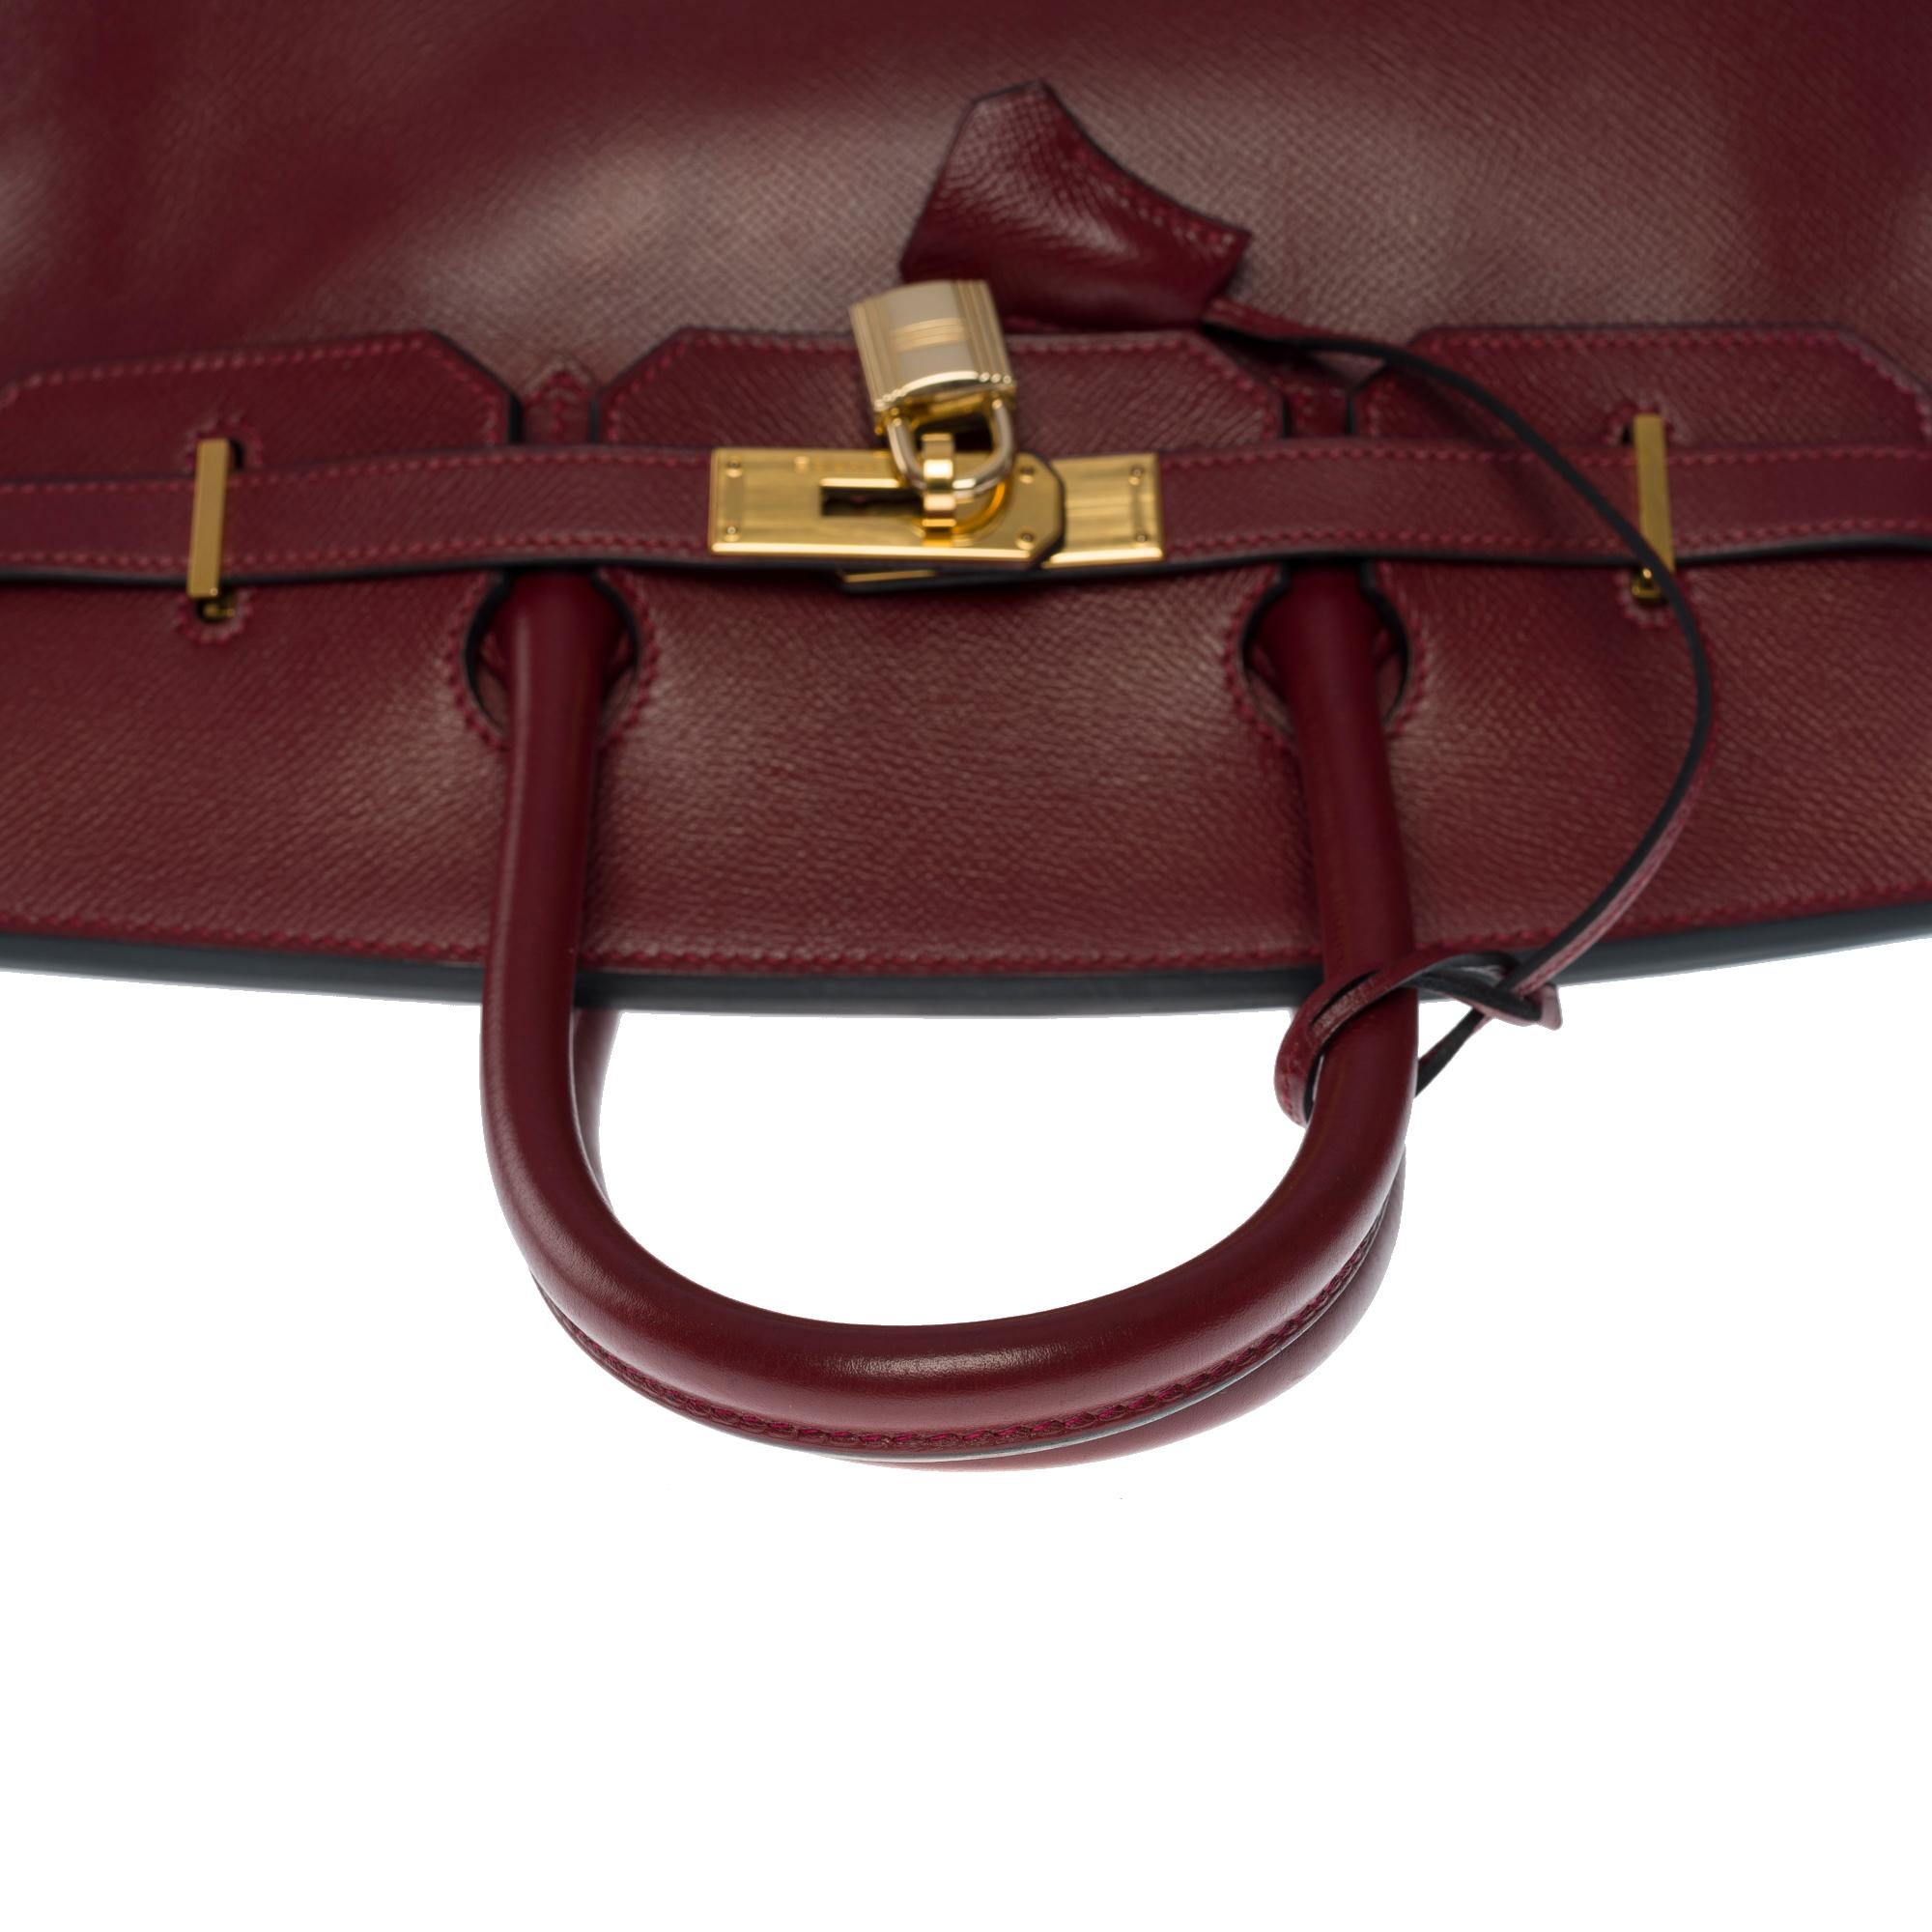 Stunning Hermès Birkin 35 handbag in Rouge H (Burgundy) epsom leather, GHW 4